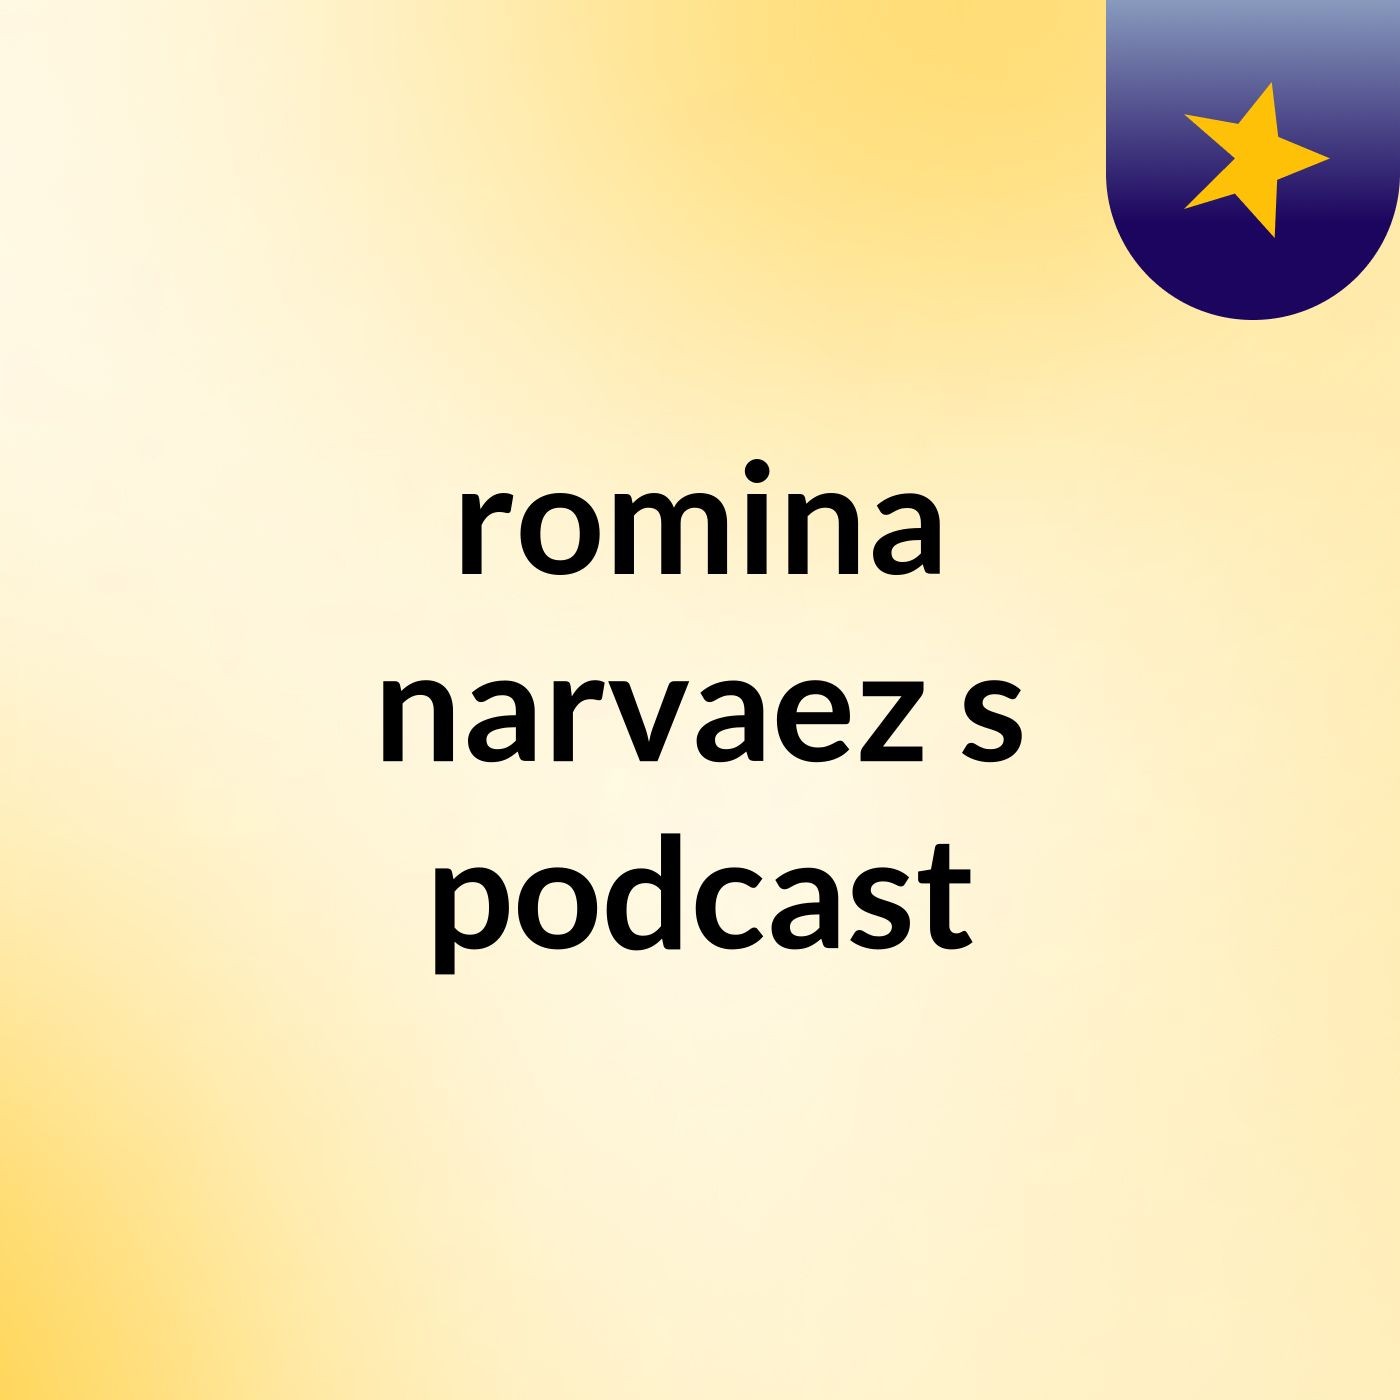 romina narvaez's podcast